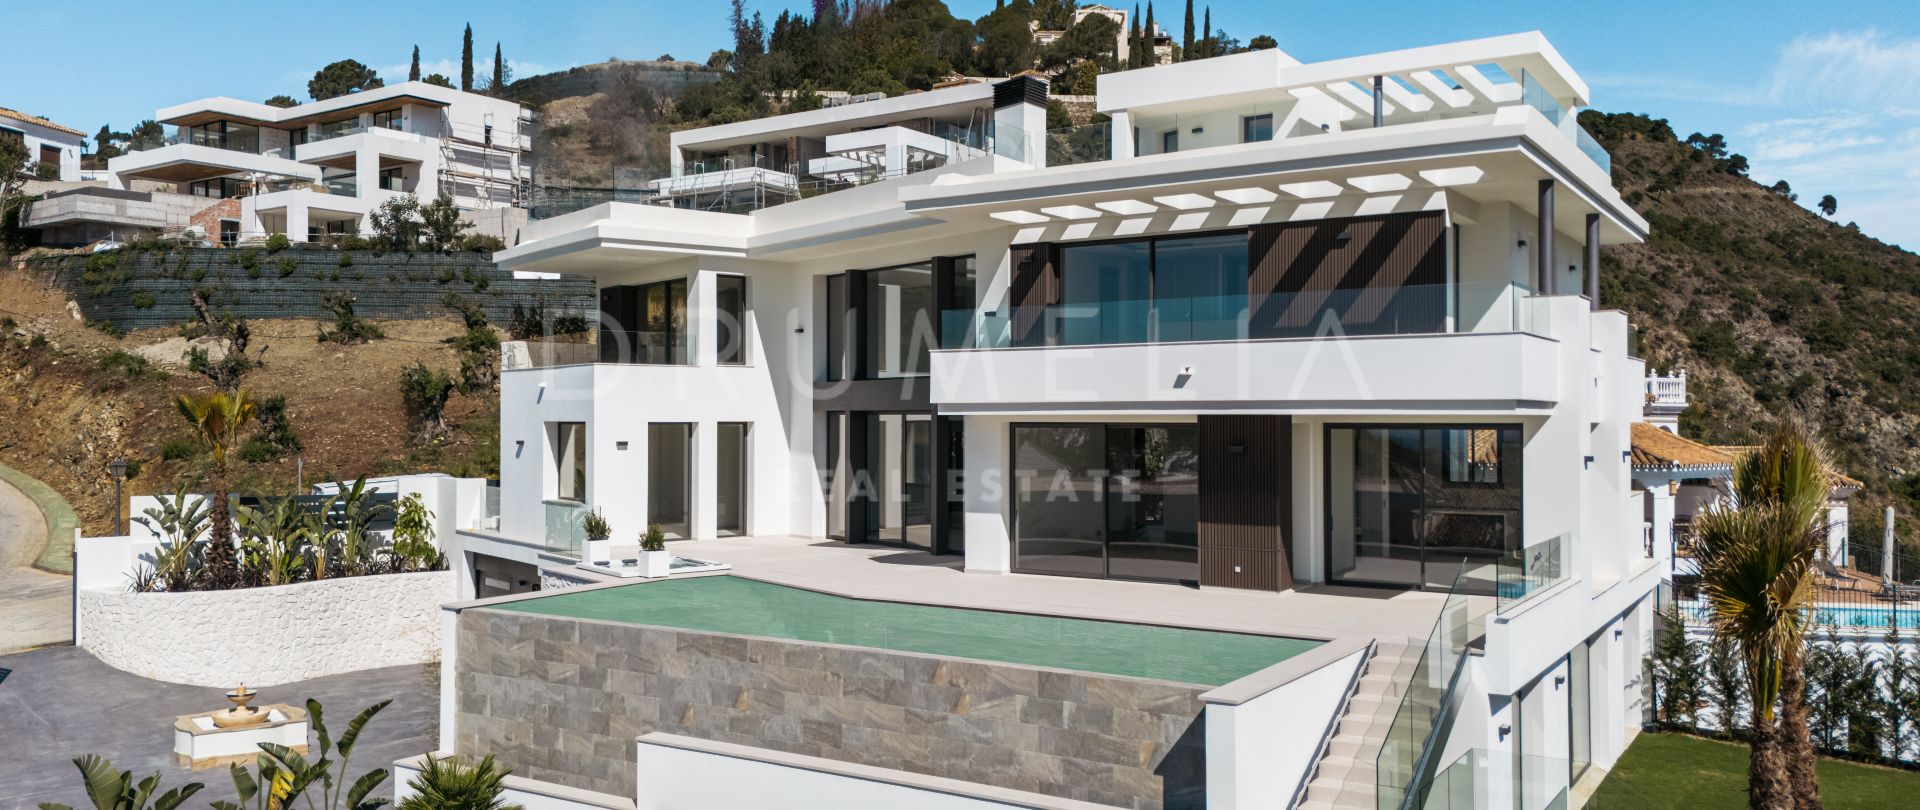 Lomas 10 - Moderne, brandneue Villa im prestigeträchtigen Lomas de la Quinta, Marbella mit atemberaubendem Meer- und Bergblick